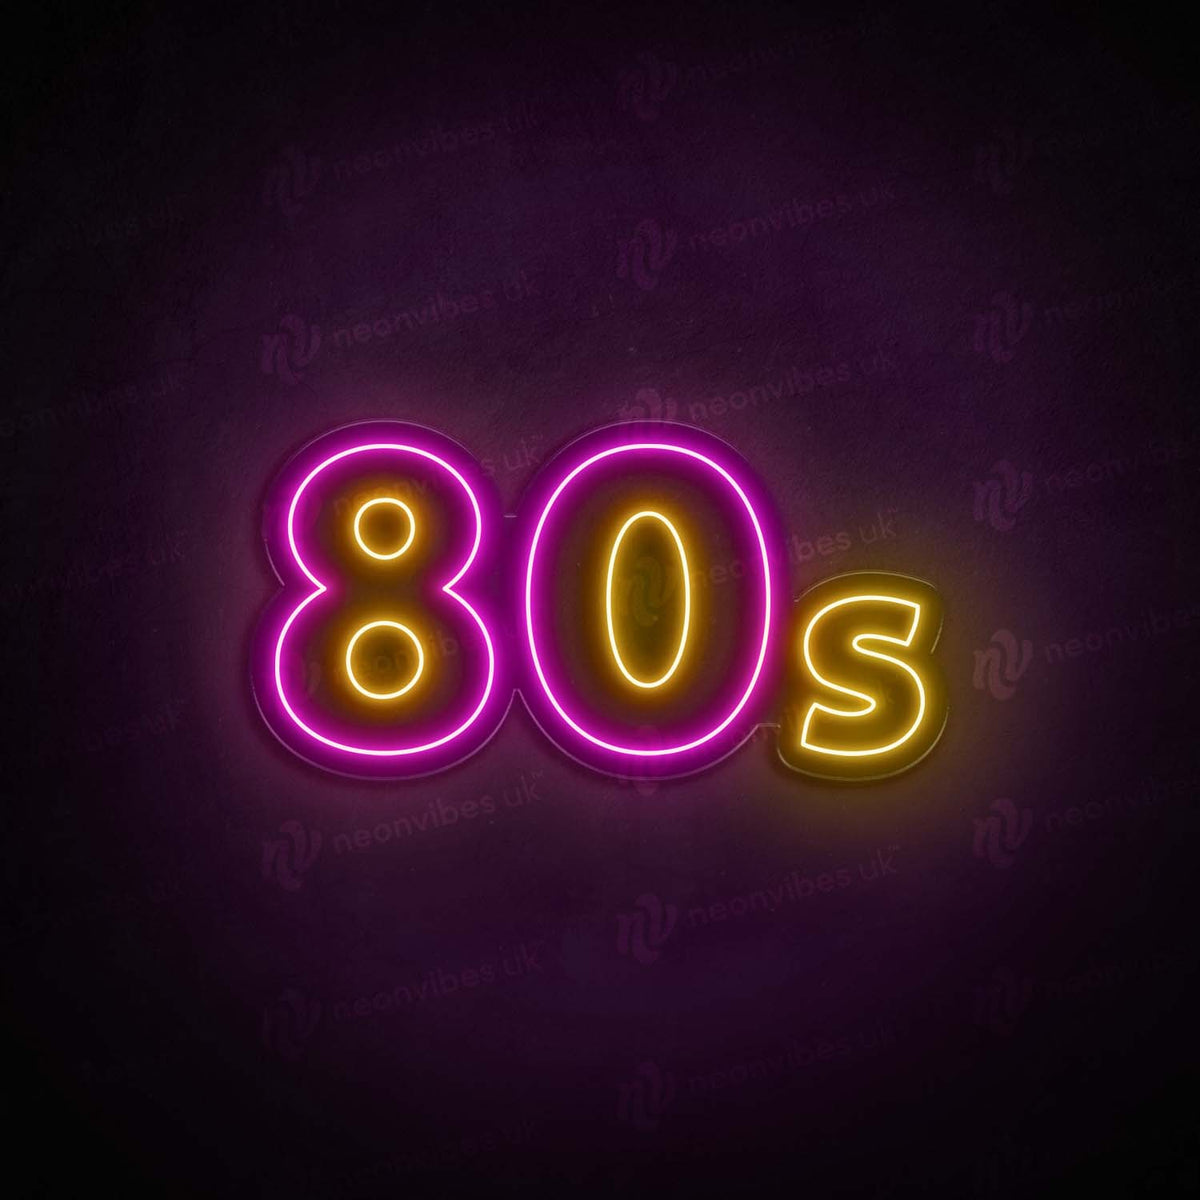 80s neon sign